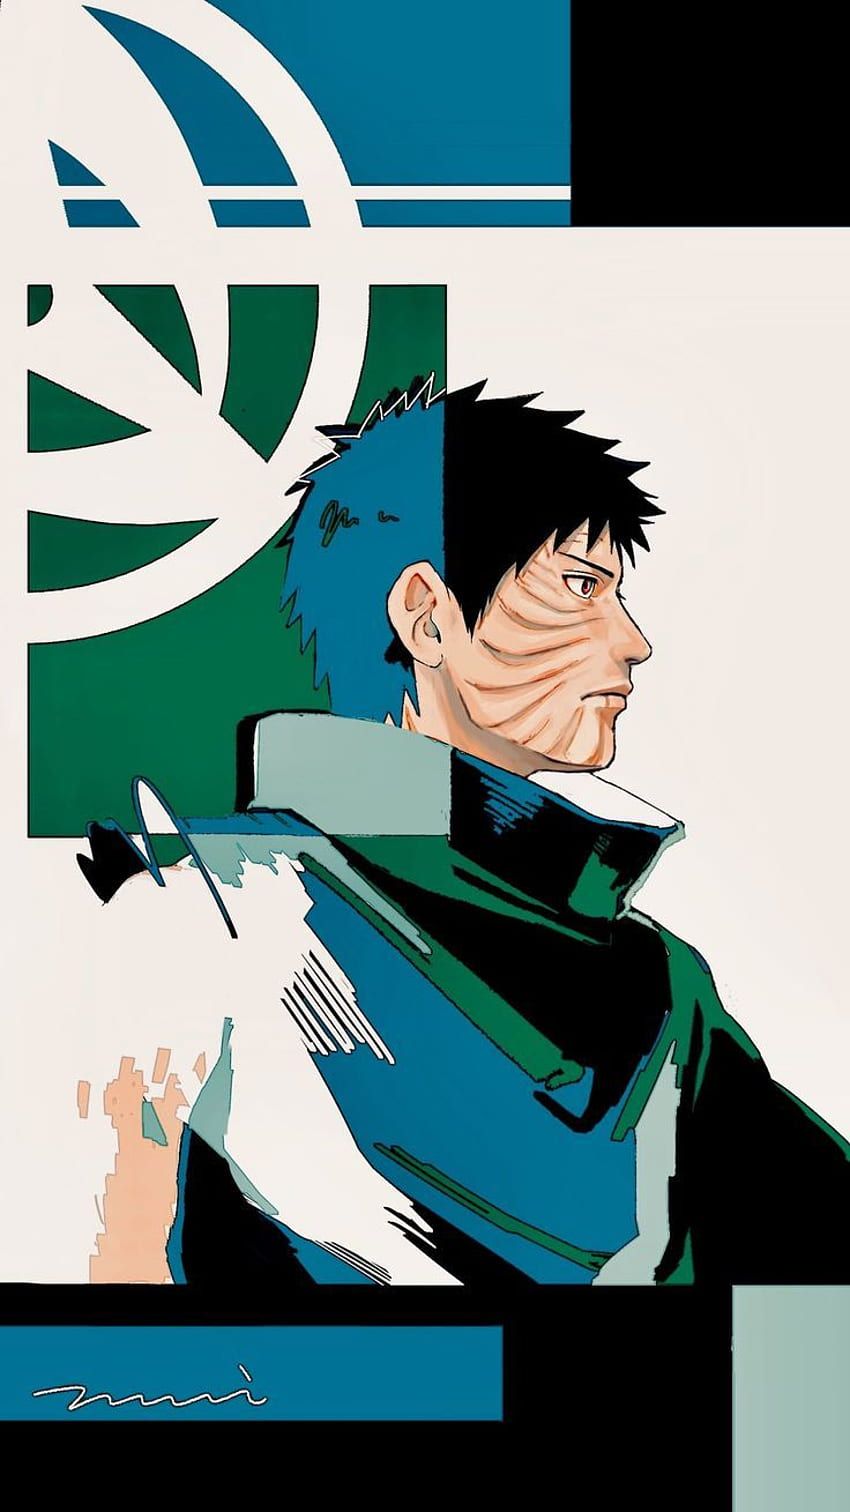 The cover of the manga series Blue Flag. - Obito Uchiha